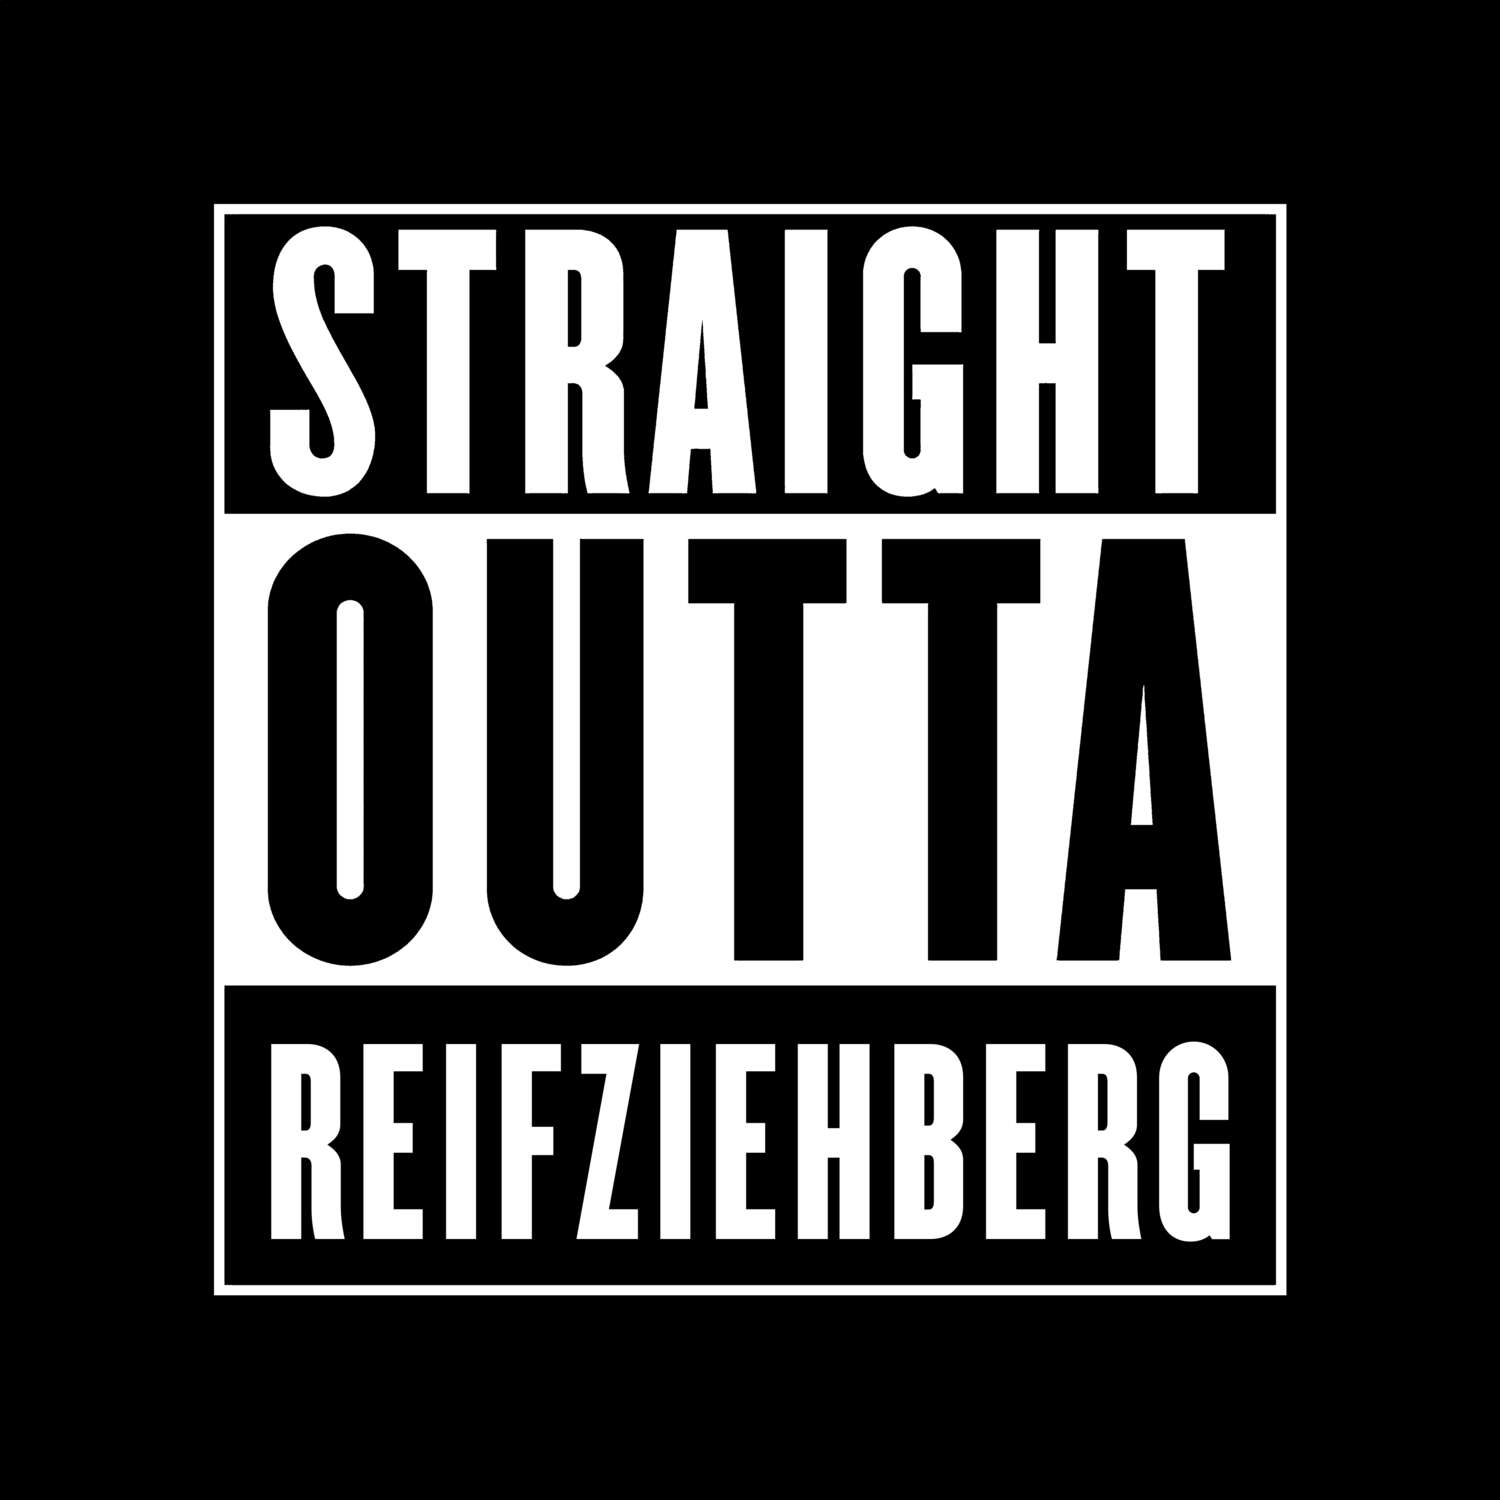 Reifziehberg T-Shirt »Straight Outta«